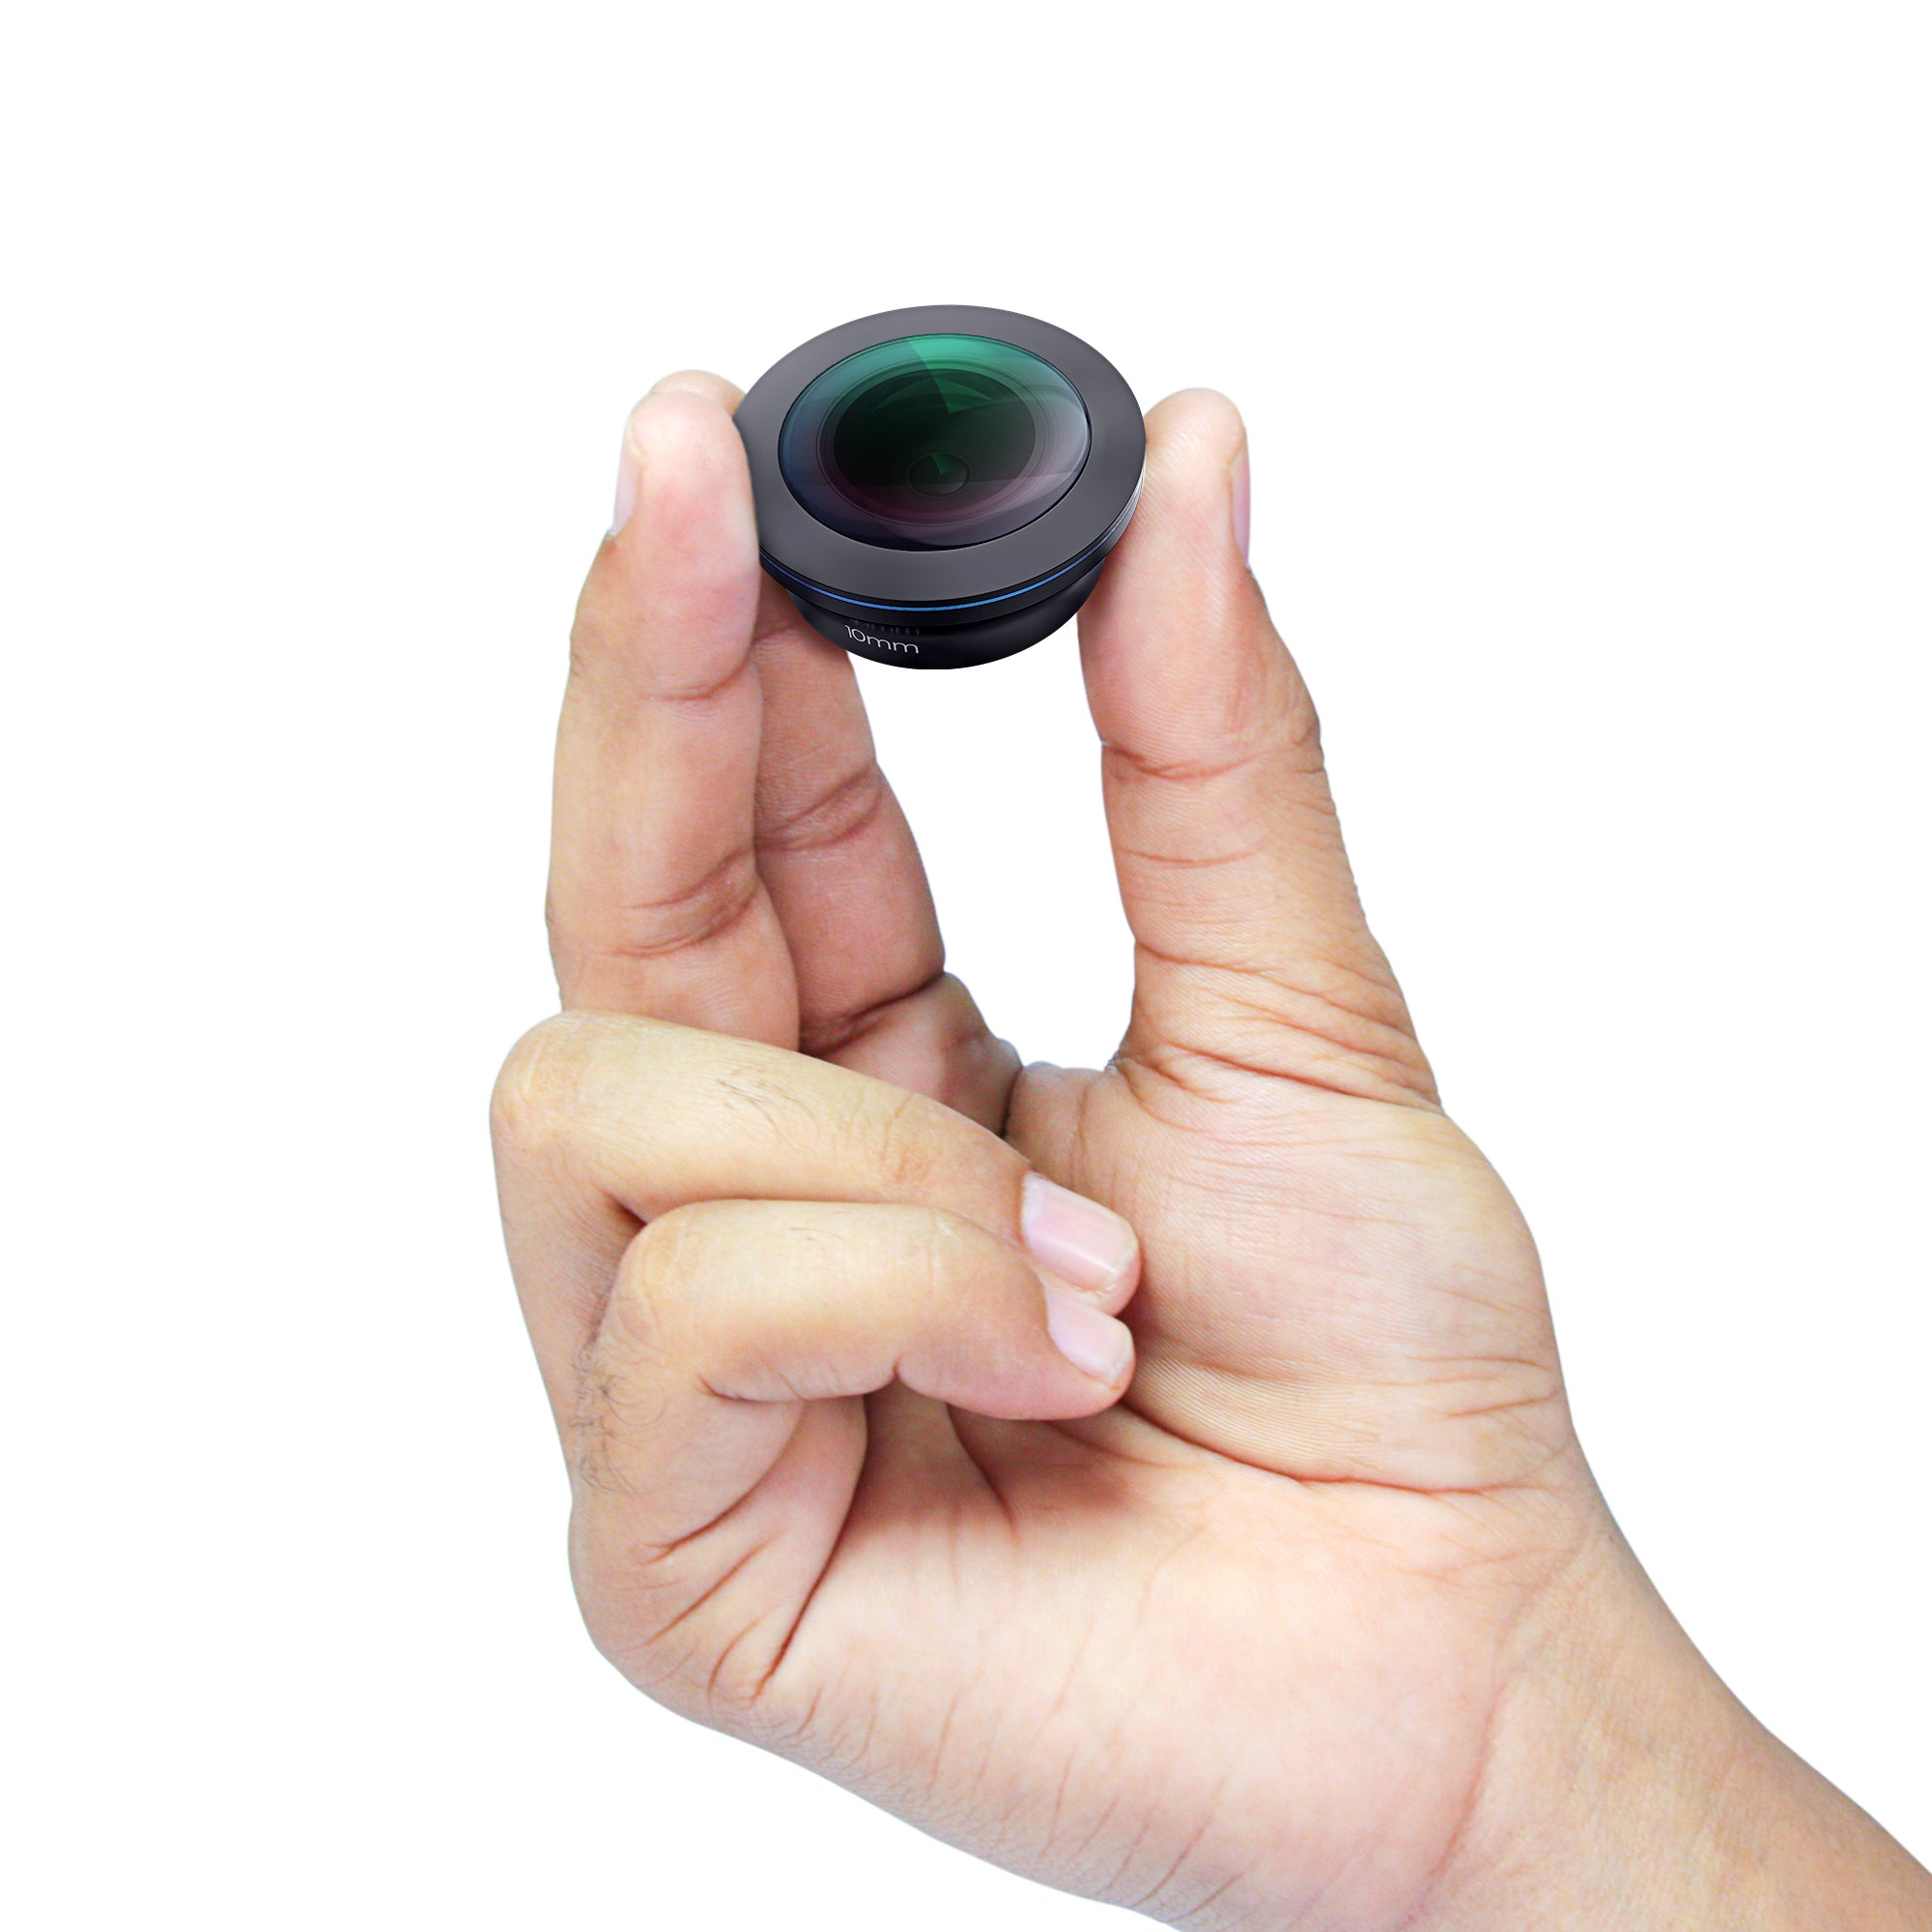 SKYVIK SIGNI One Mobile Camera 10mm Ultra Fisheye Lens Kit